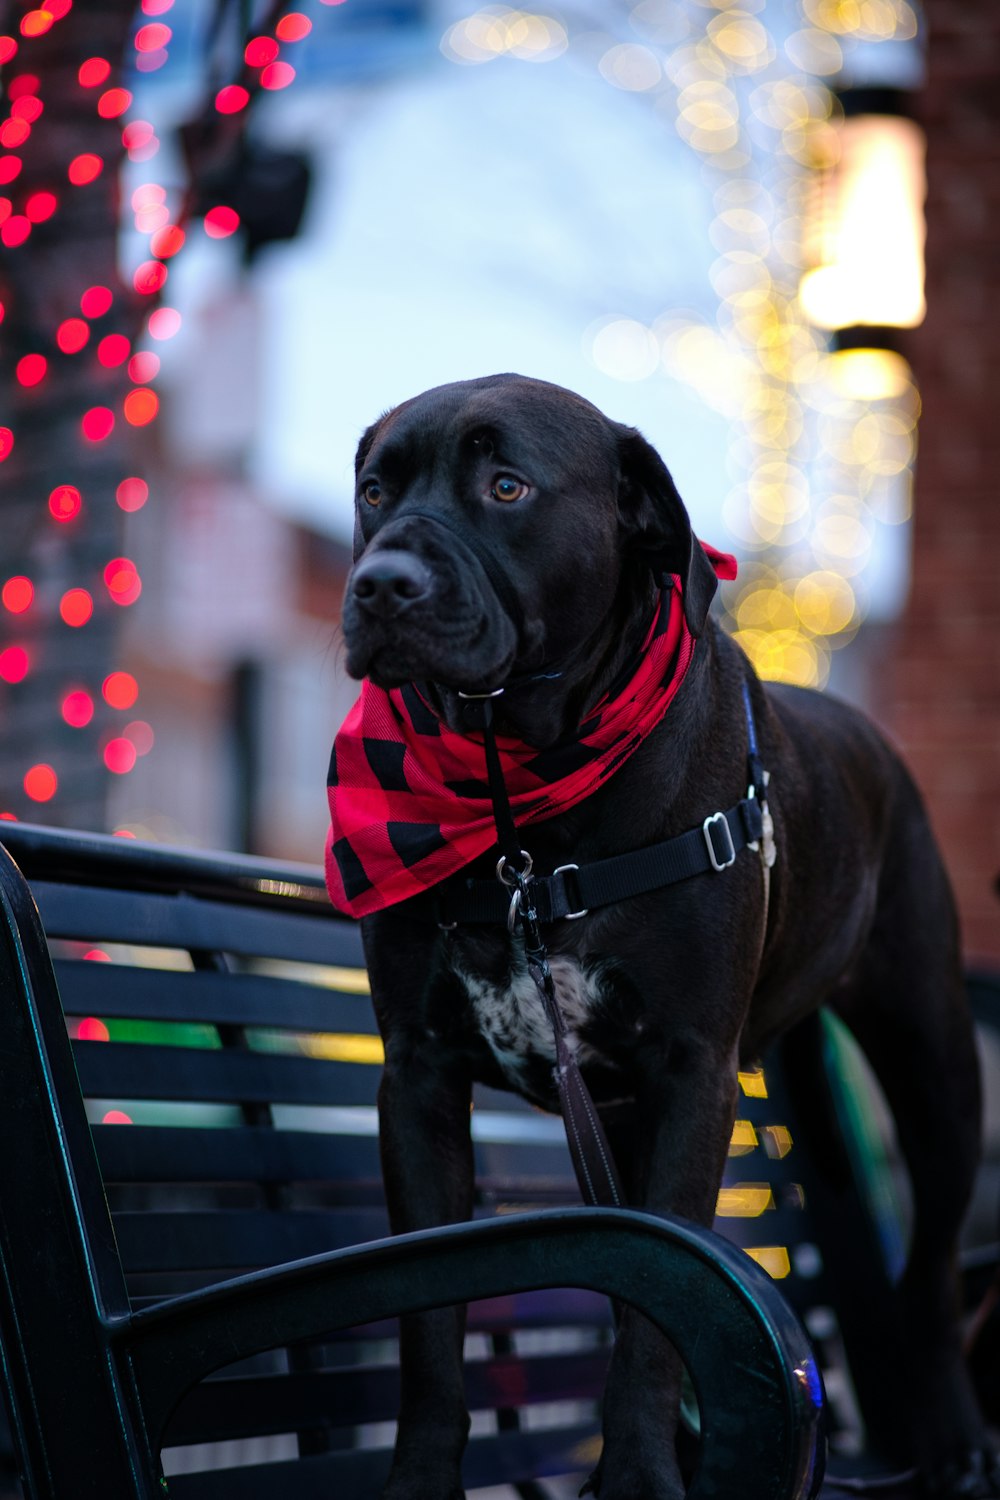 a black dog wearing a red bandana sitting on a bench